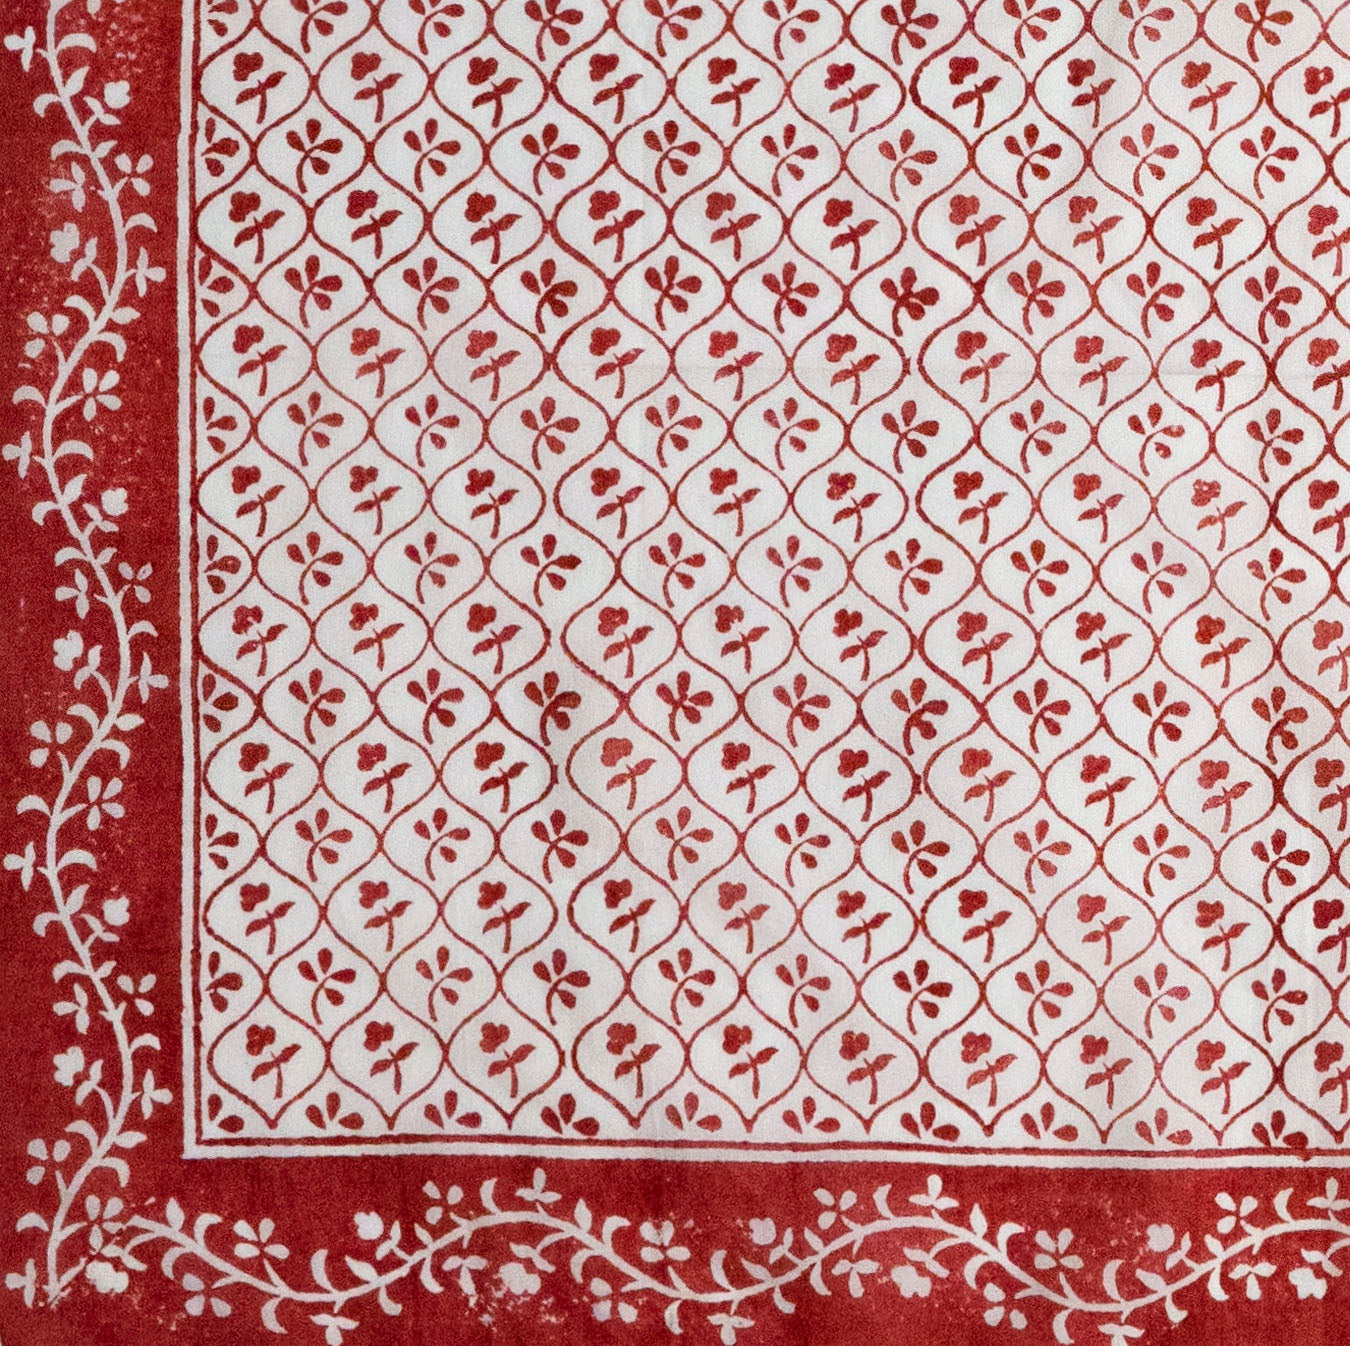 Red & White "Sprig'd" Handkerchief - Burnley & Trowbridge Co.